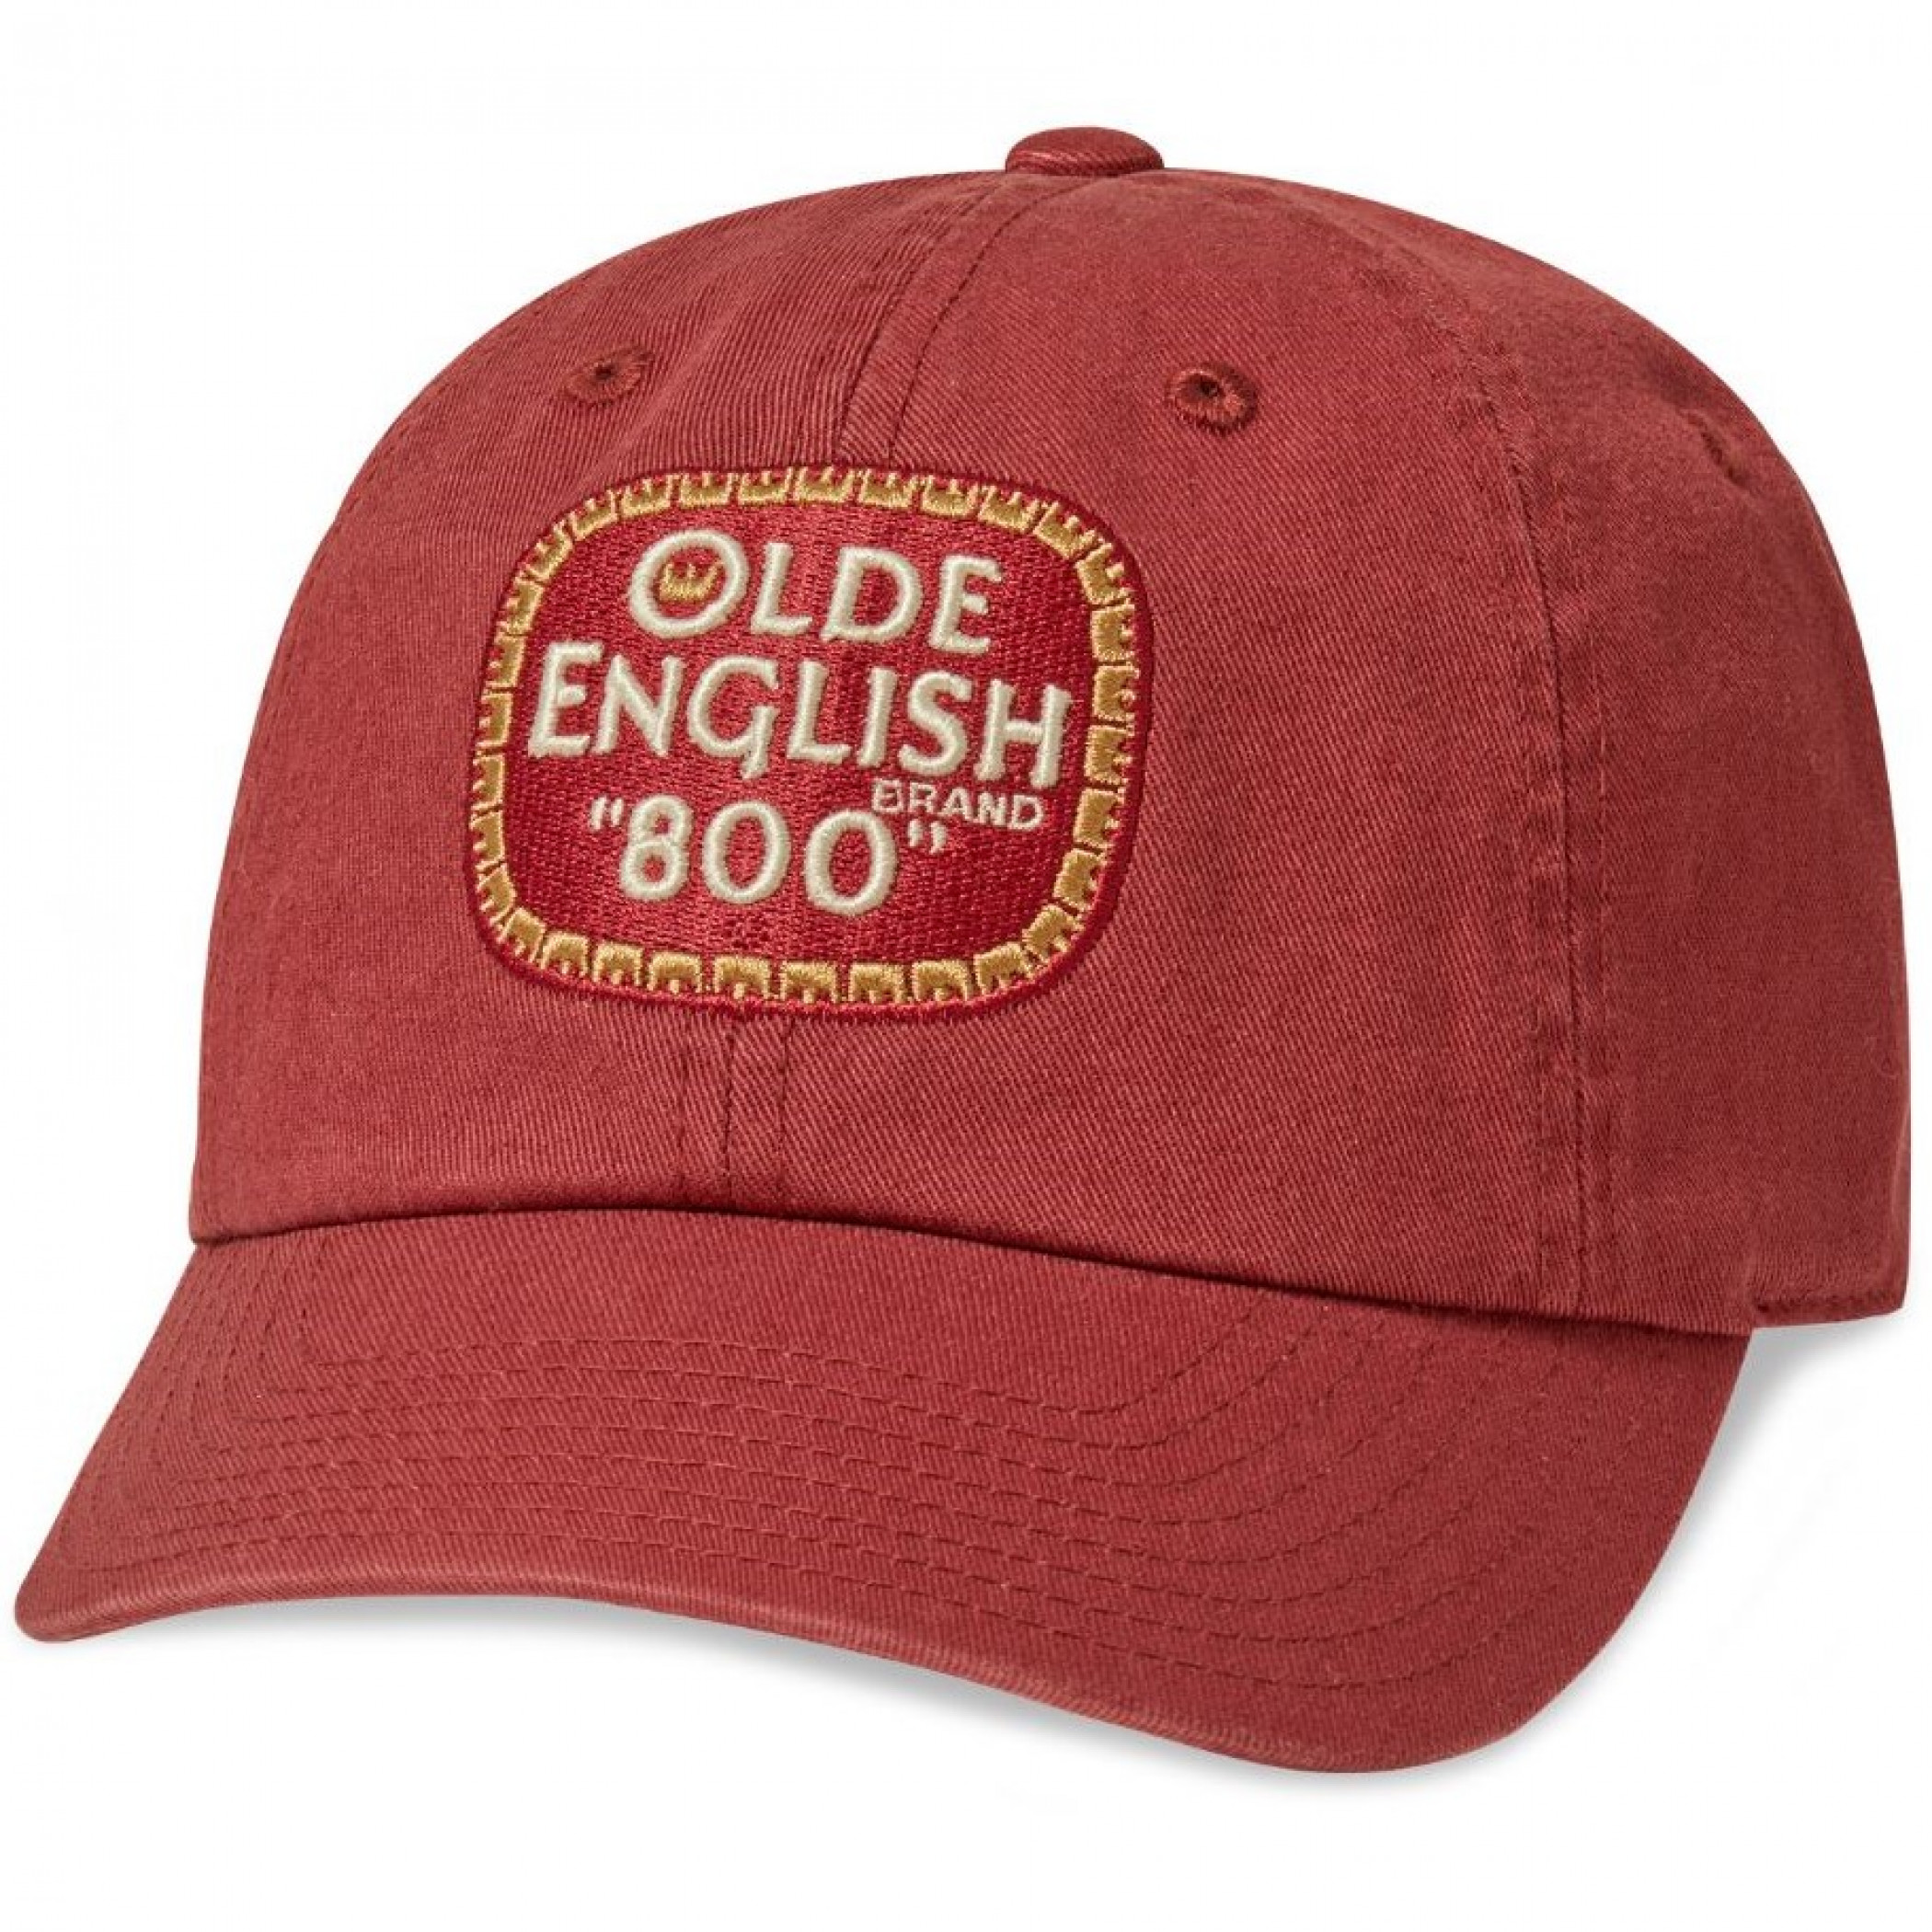 Olde English '800' Brand Logo Adjustable Ballpark Hat